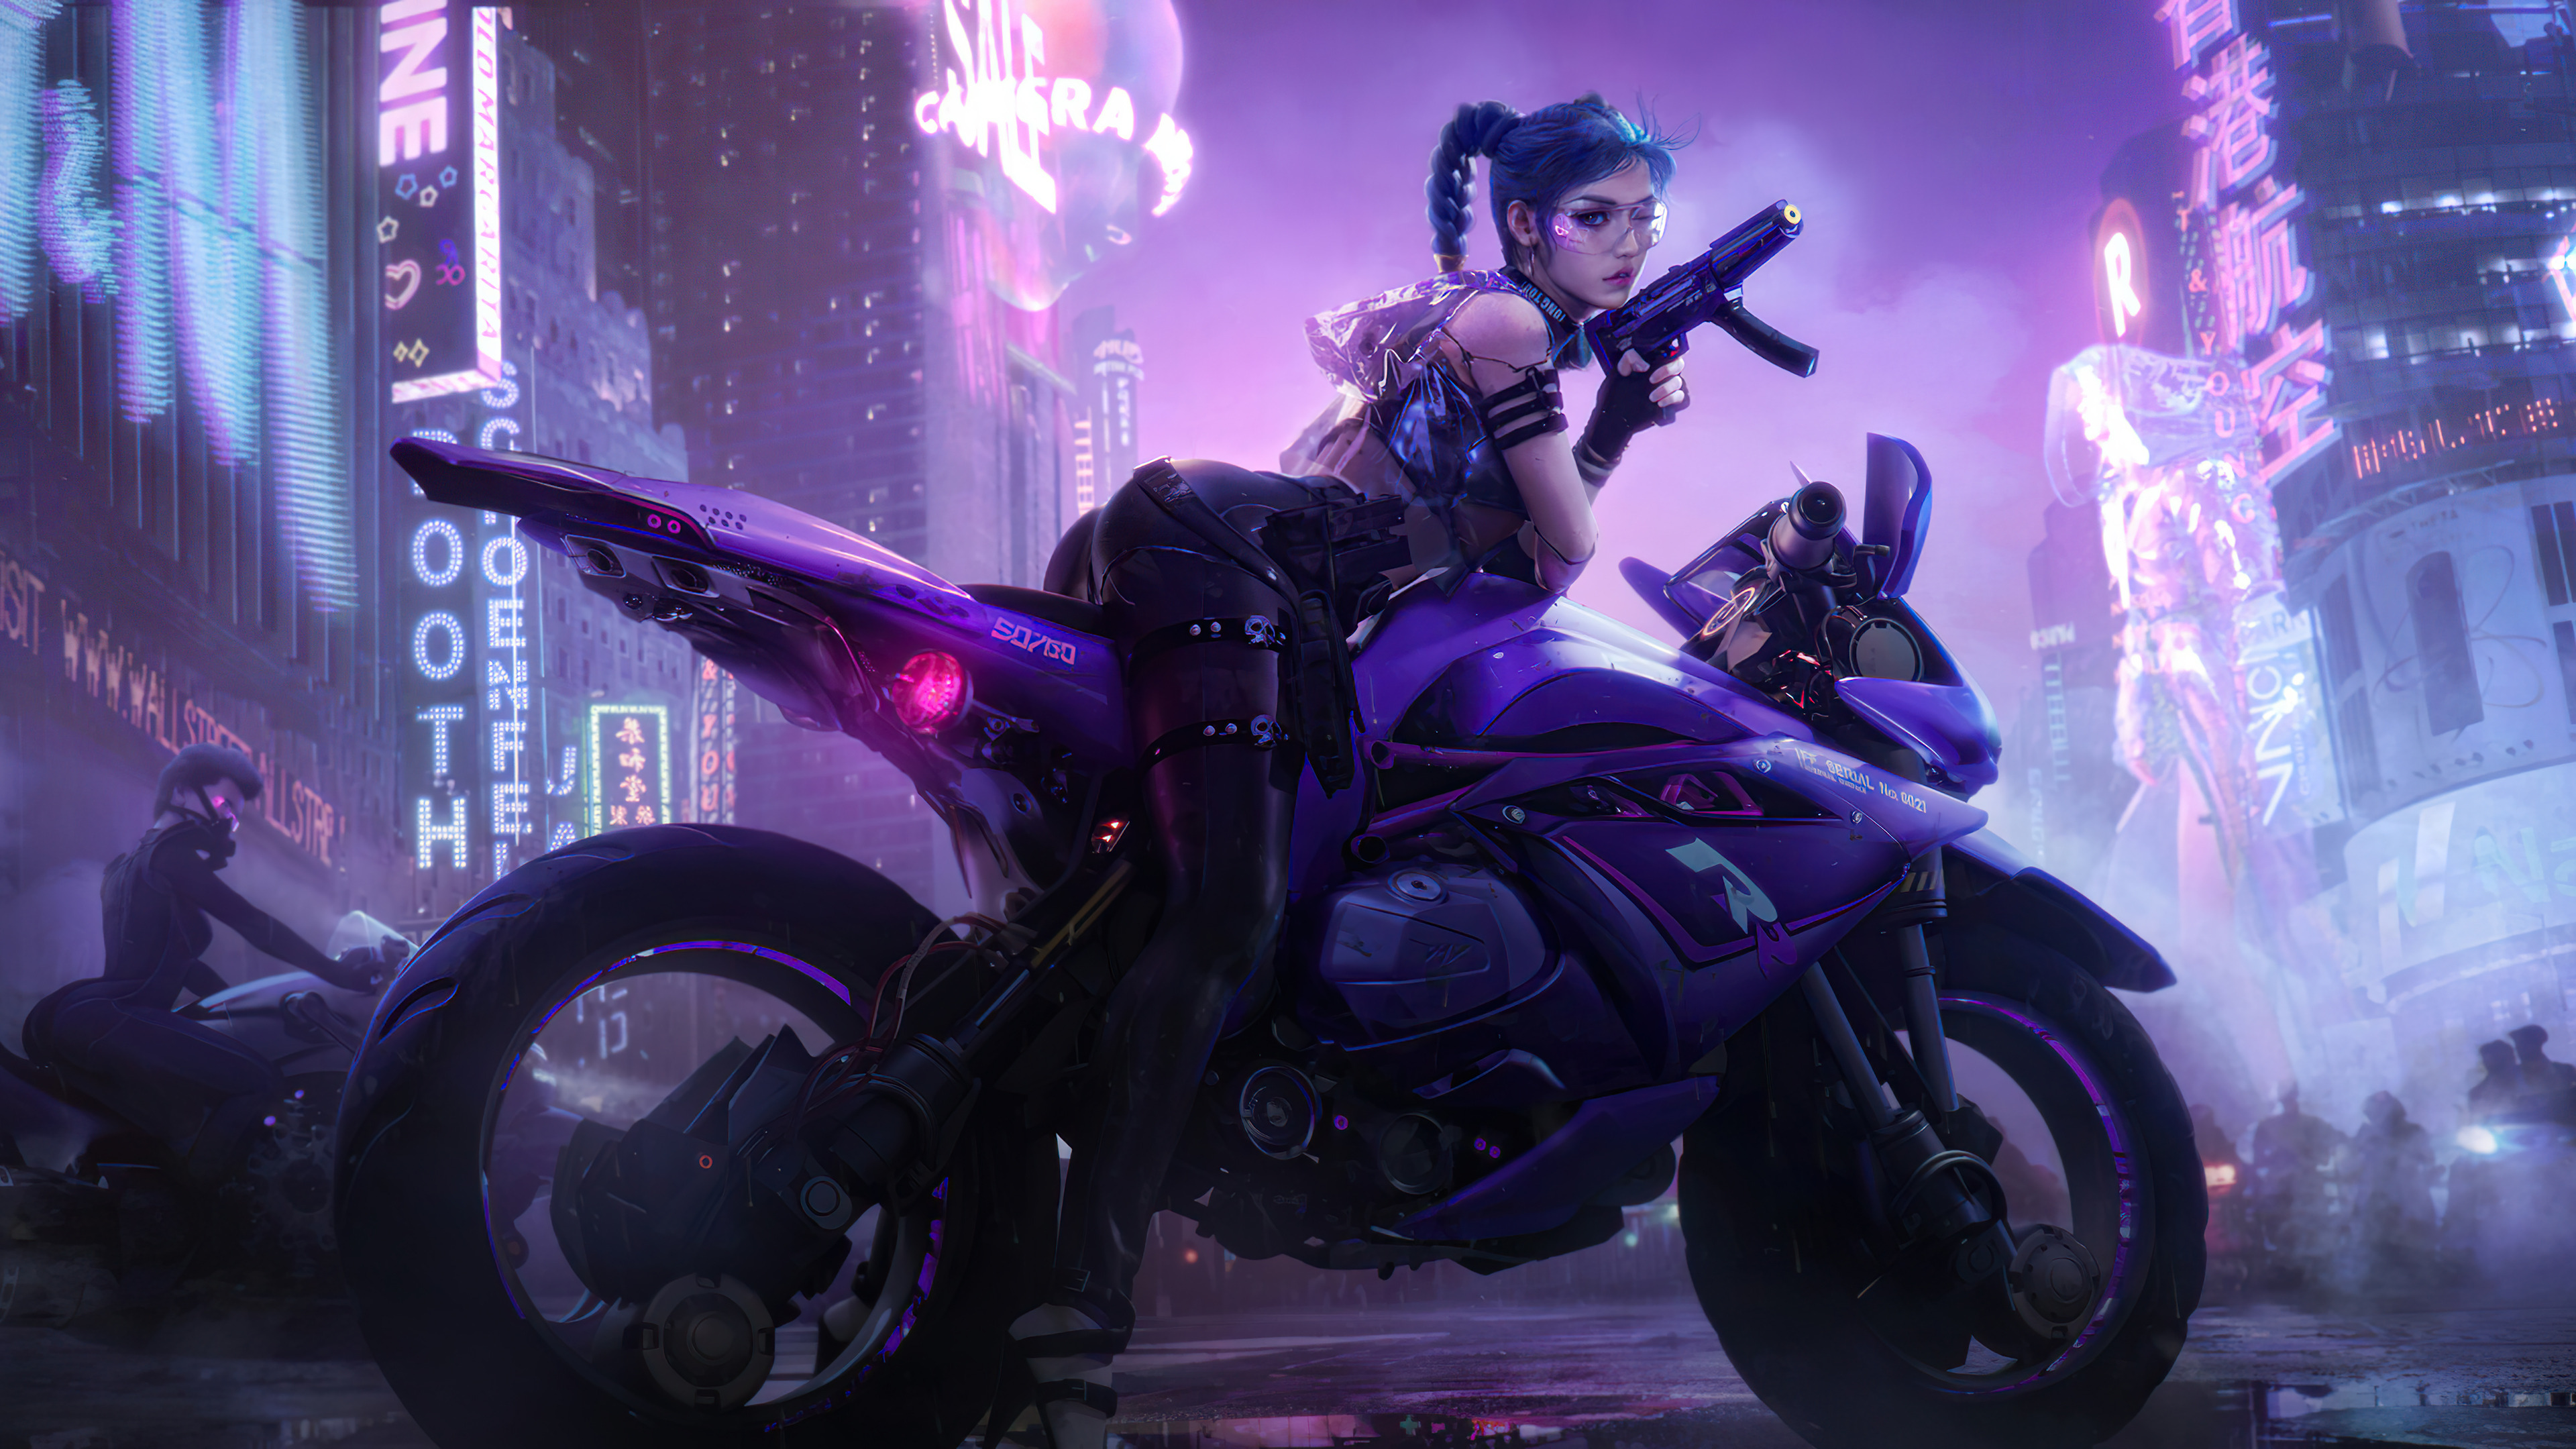 Biker Girl Cyberpunk Girl With Weapon 3840x2160